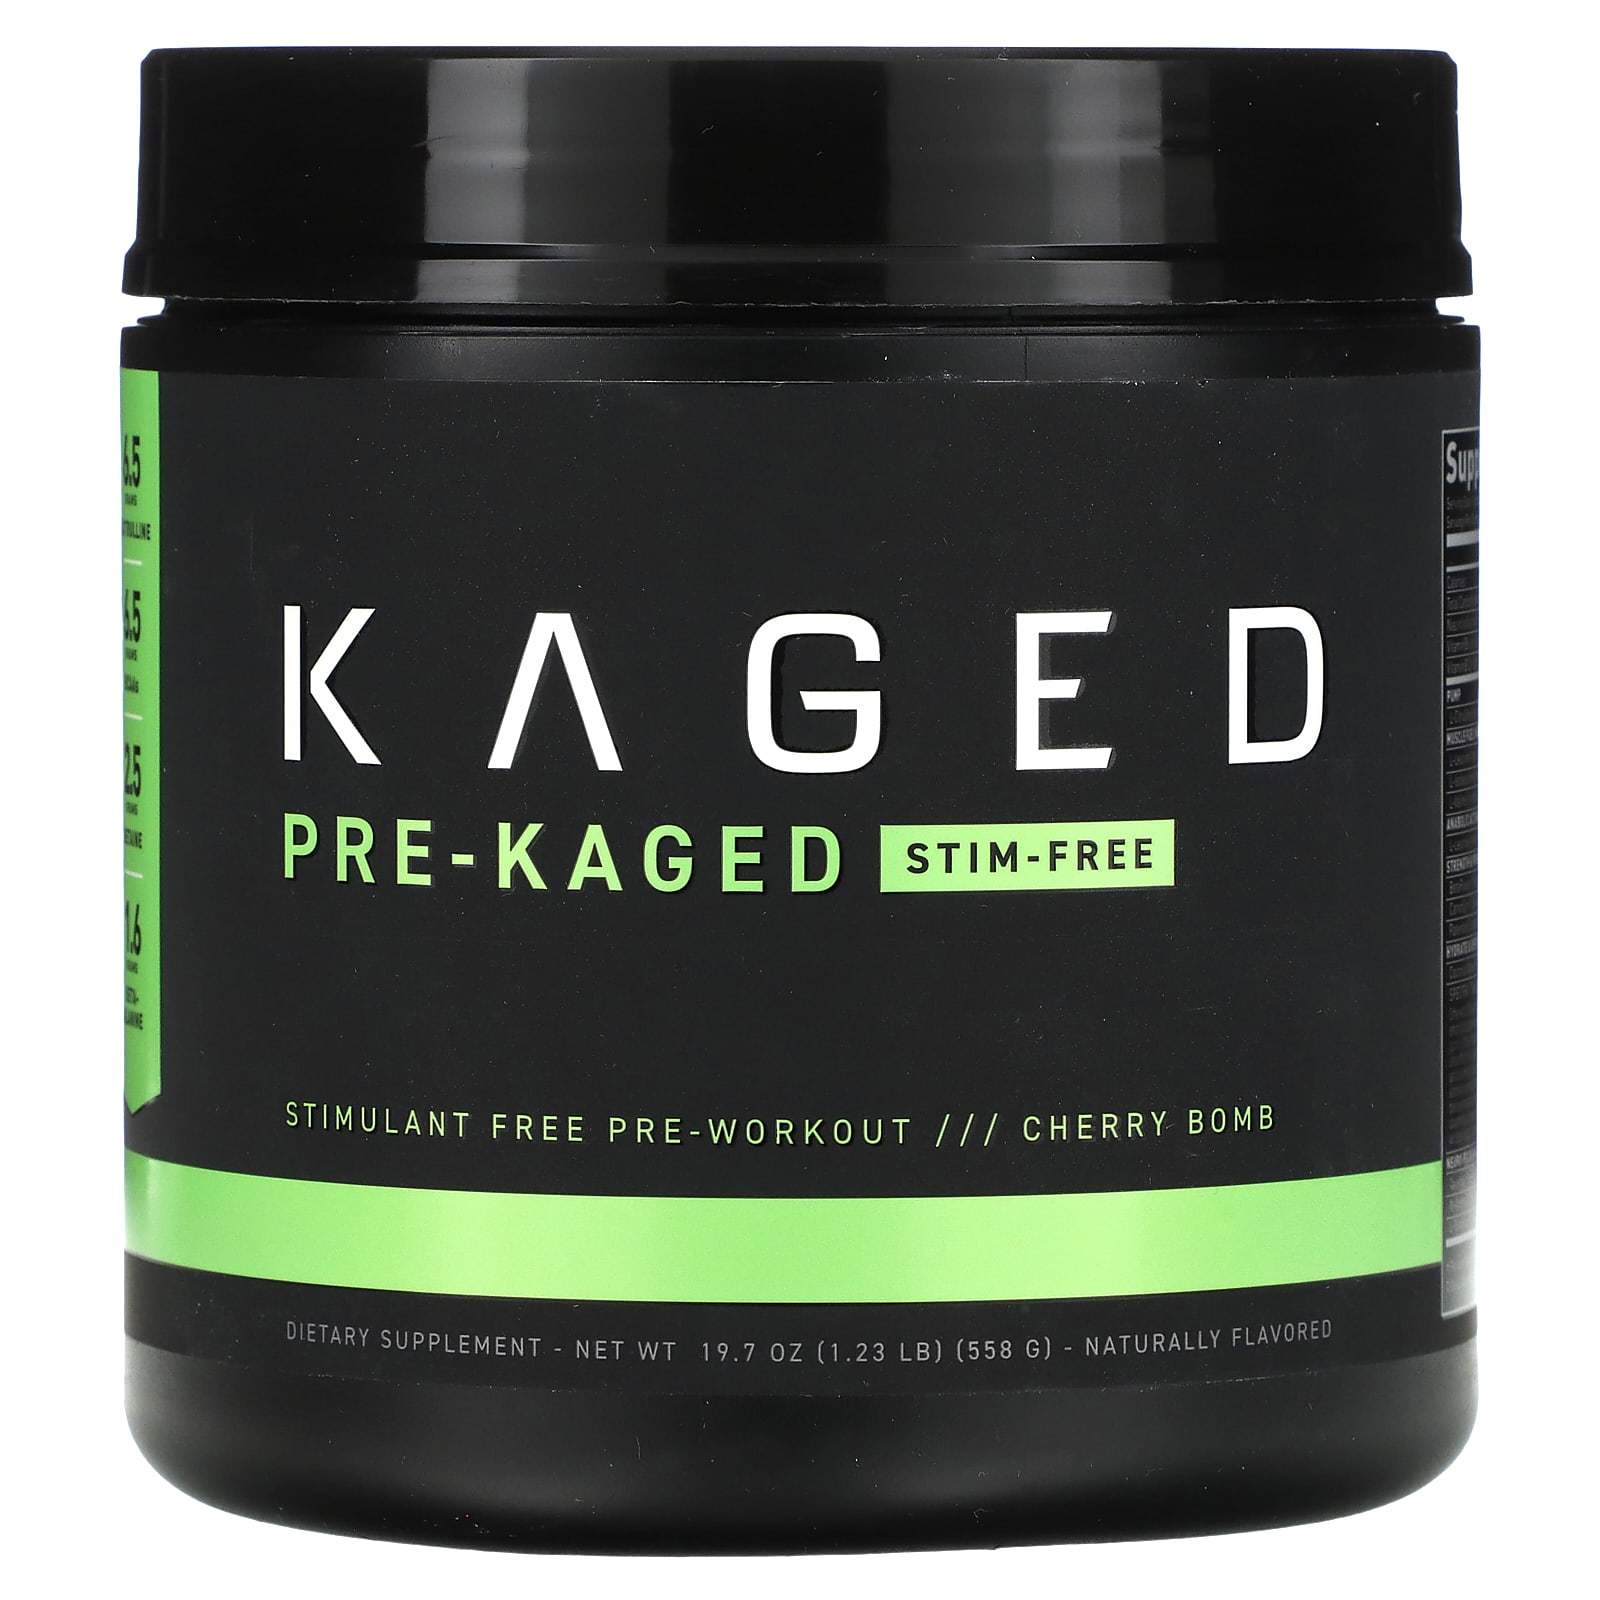 Kaged, PRE-KAGED, Stimulant Free Pre-Workout, Cherry Bomb, 1.23 lb (558 g)